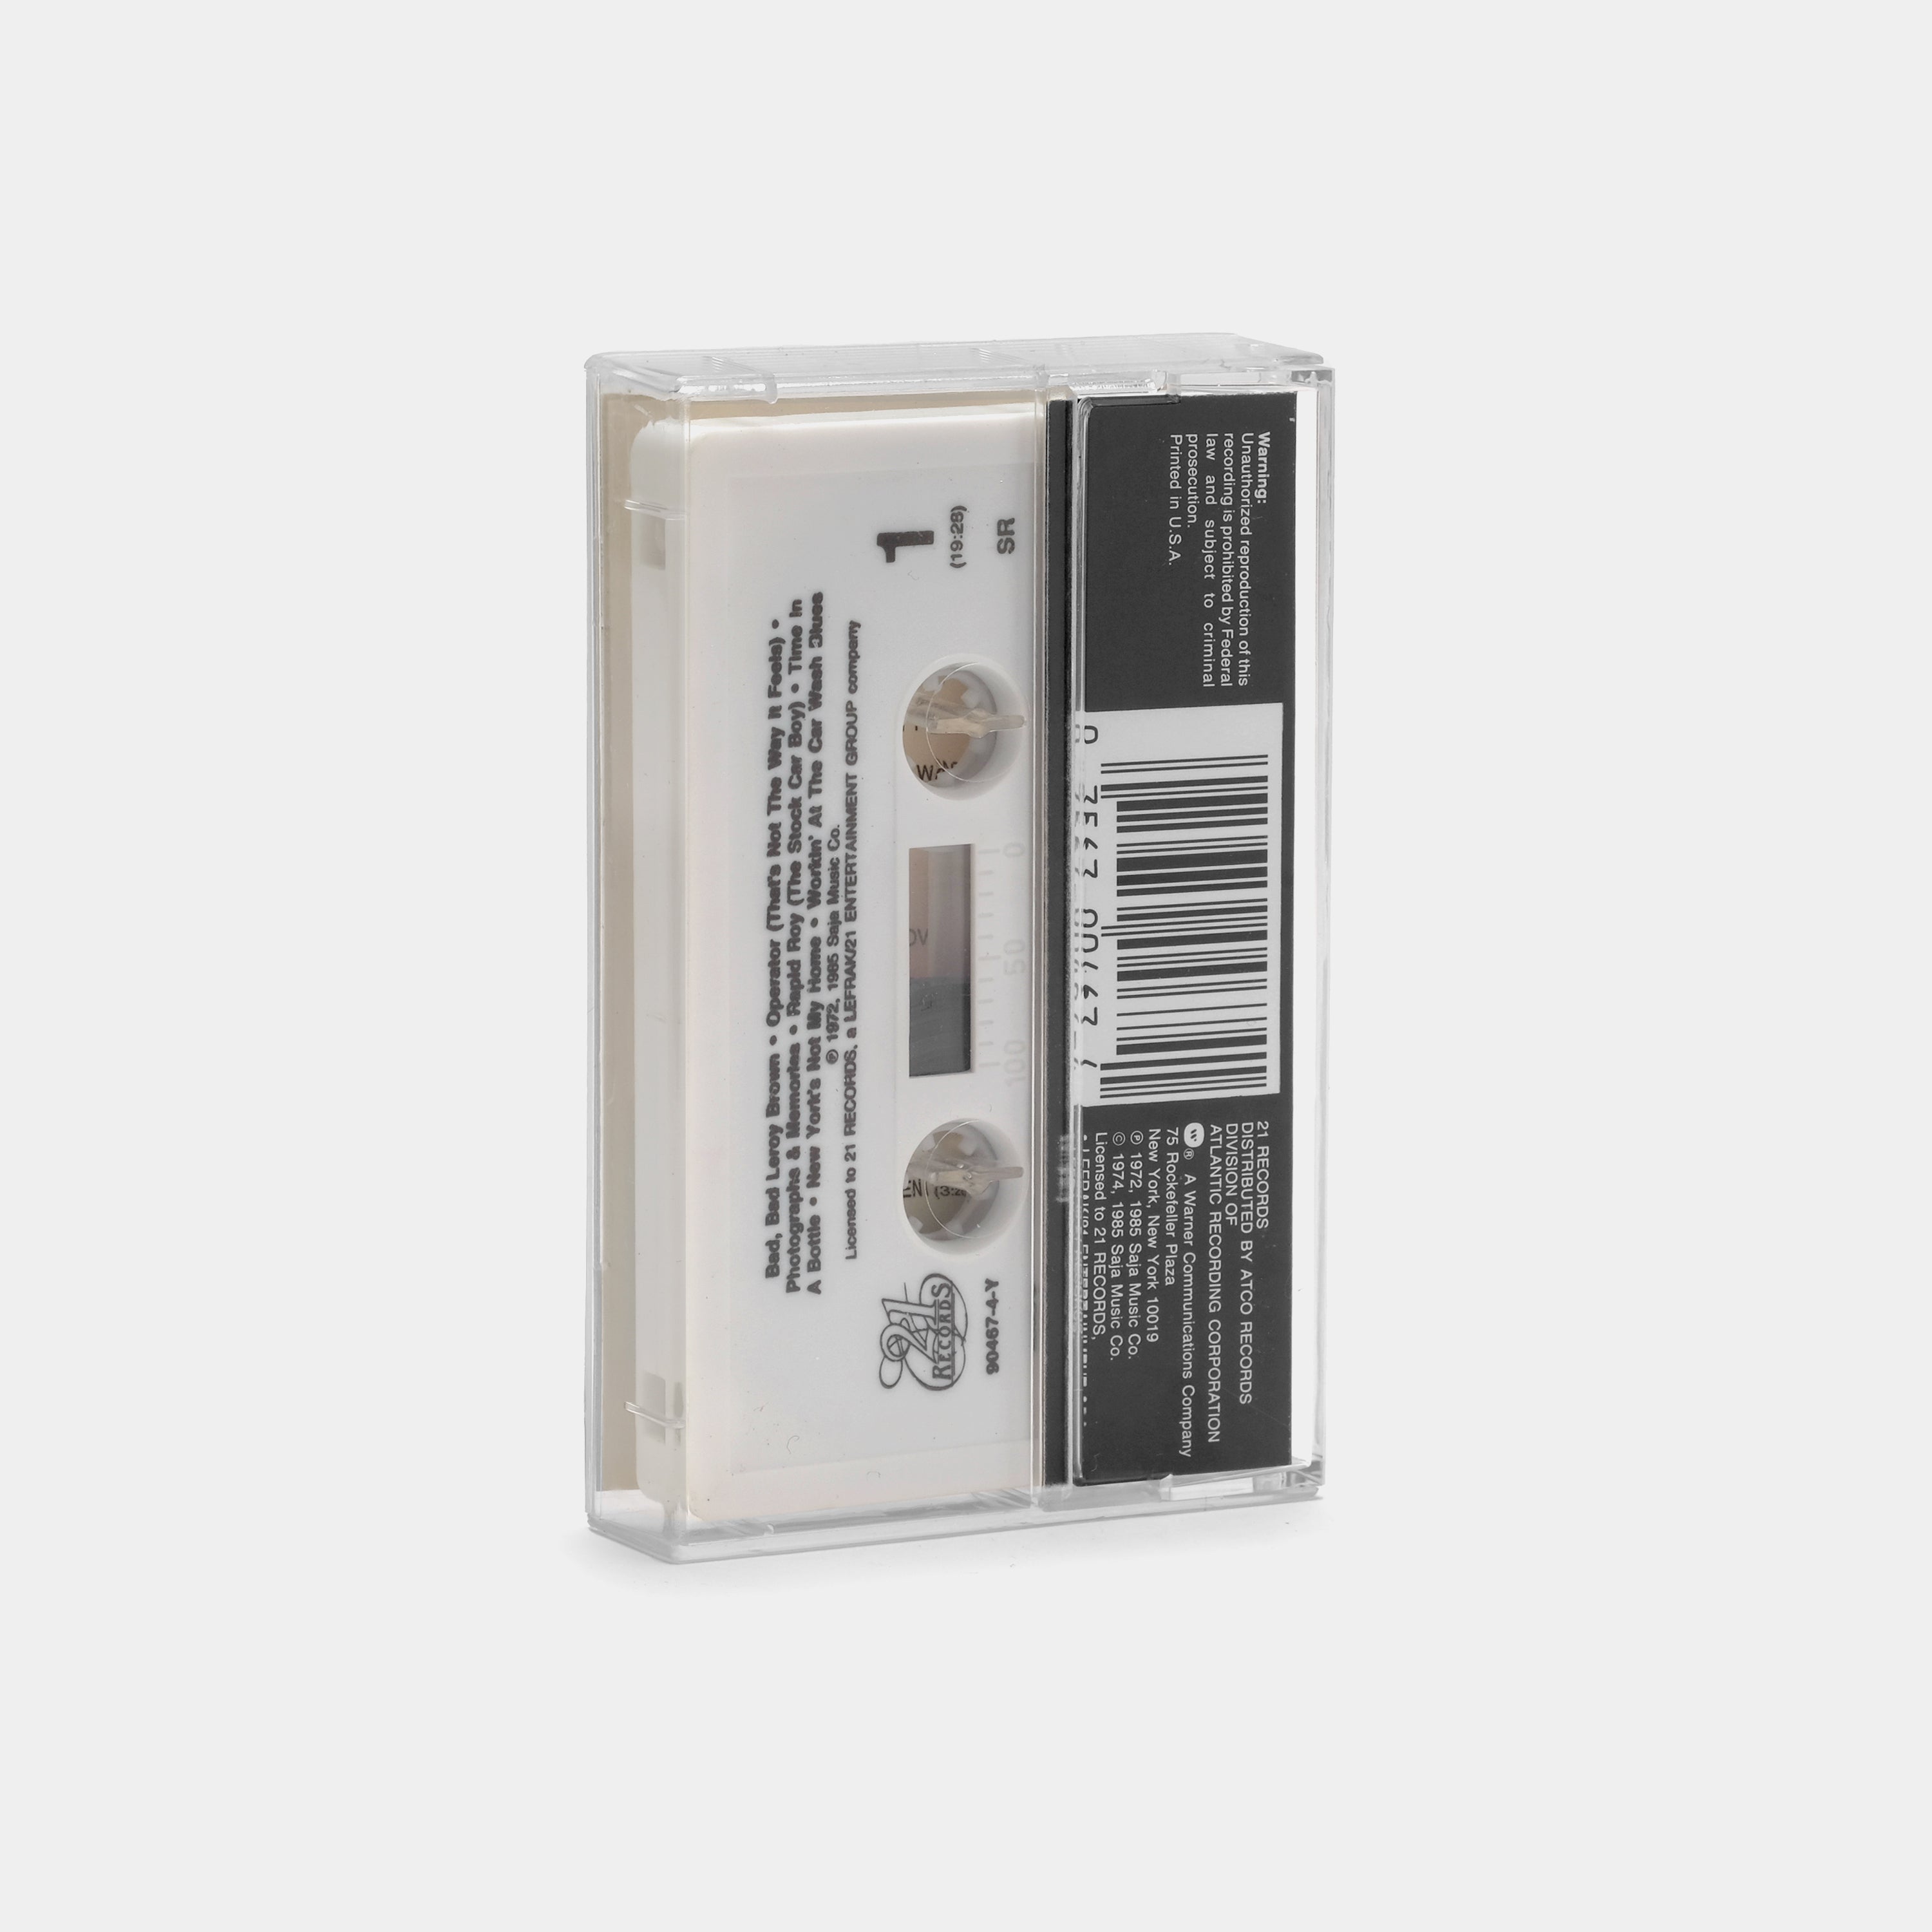 Jim Croce - Photographs & Memories: His Greatest Hits Cassette Tape